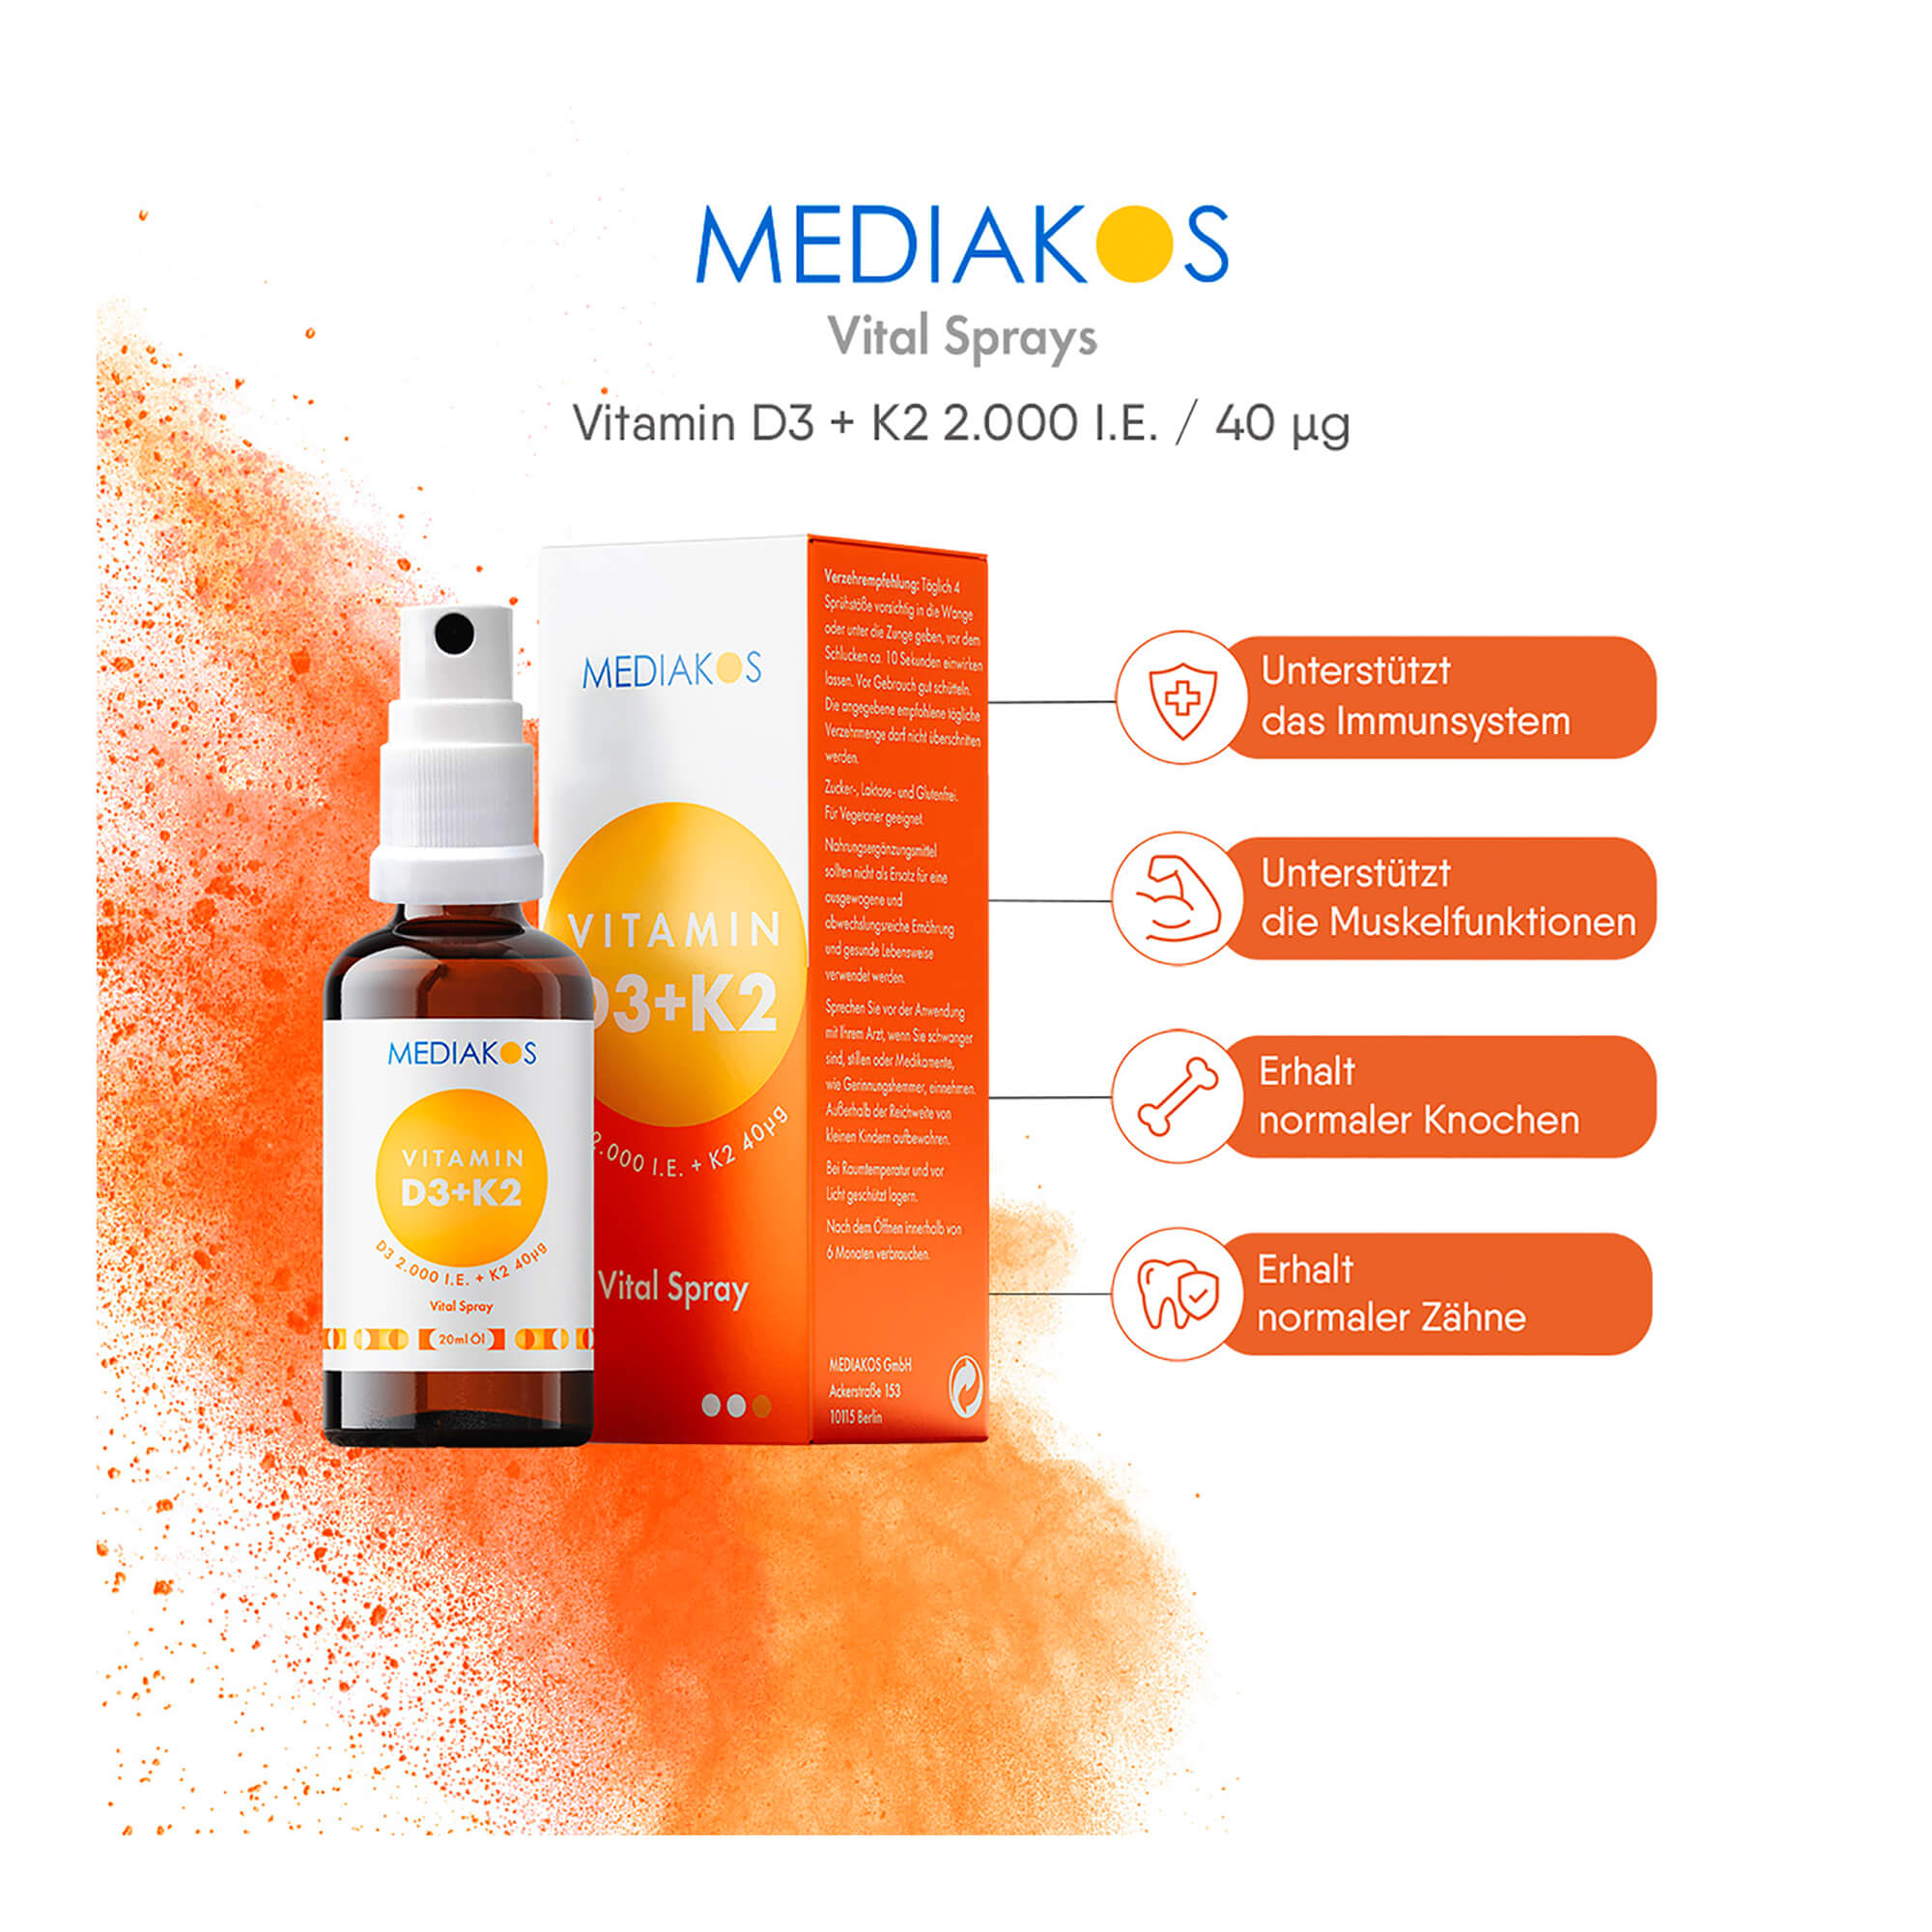 Mediakos Vitamin D3+K2 2.000 I.E. Vital Spray Vorteile